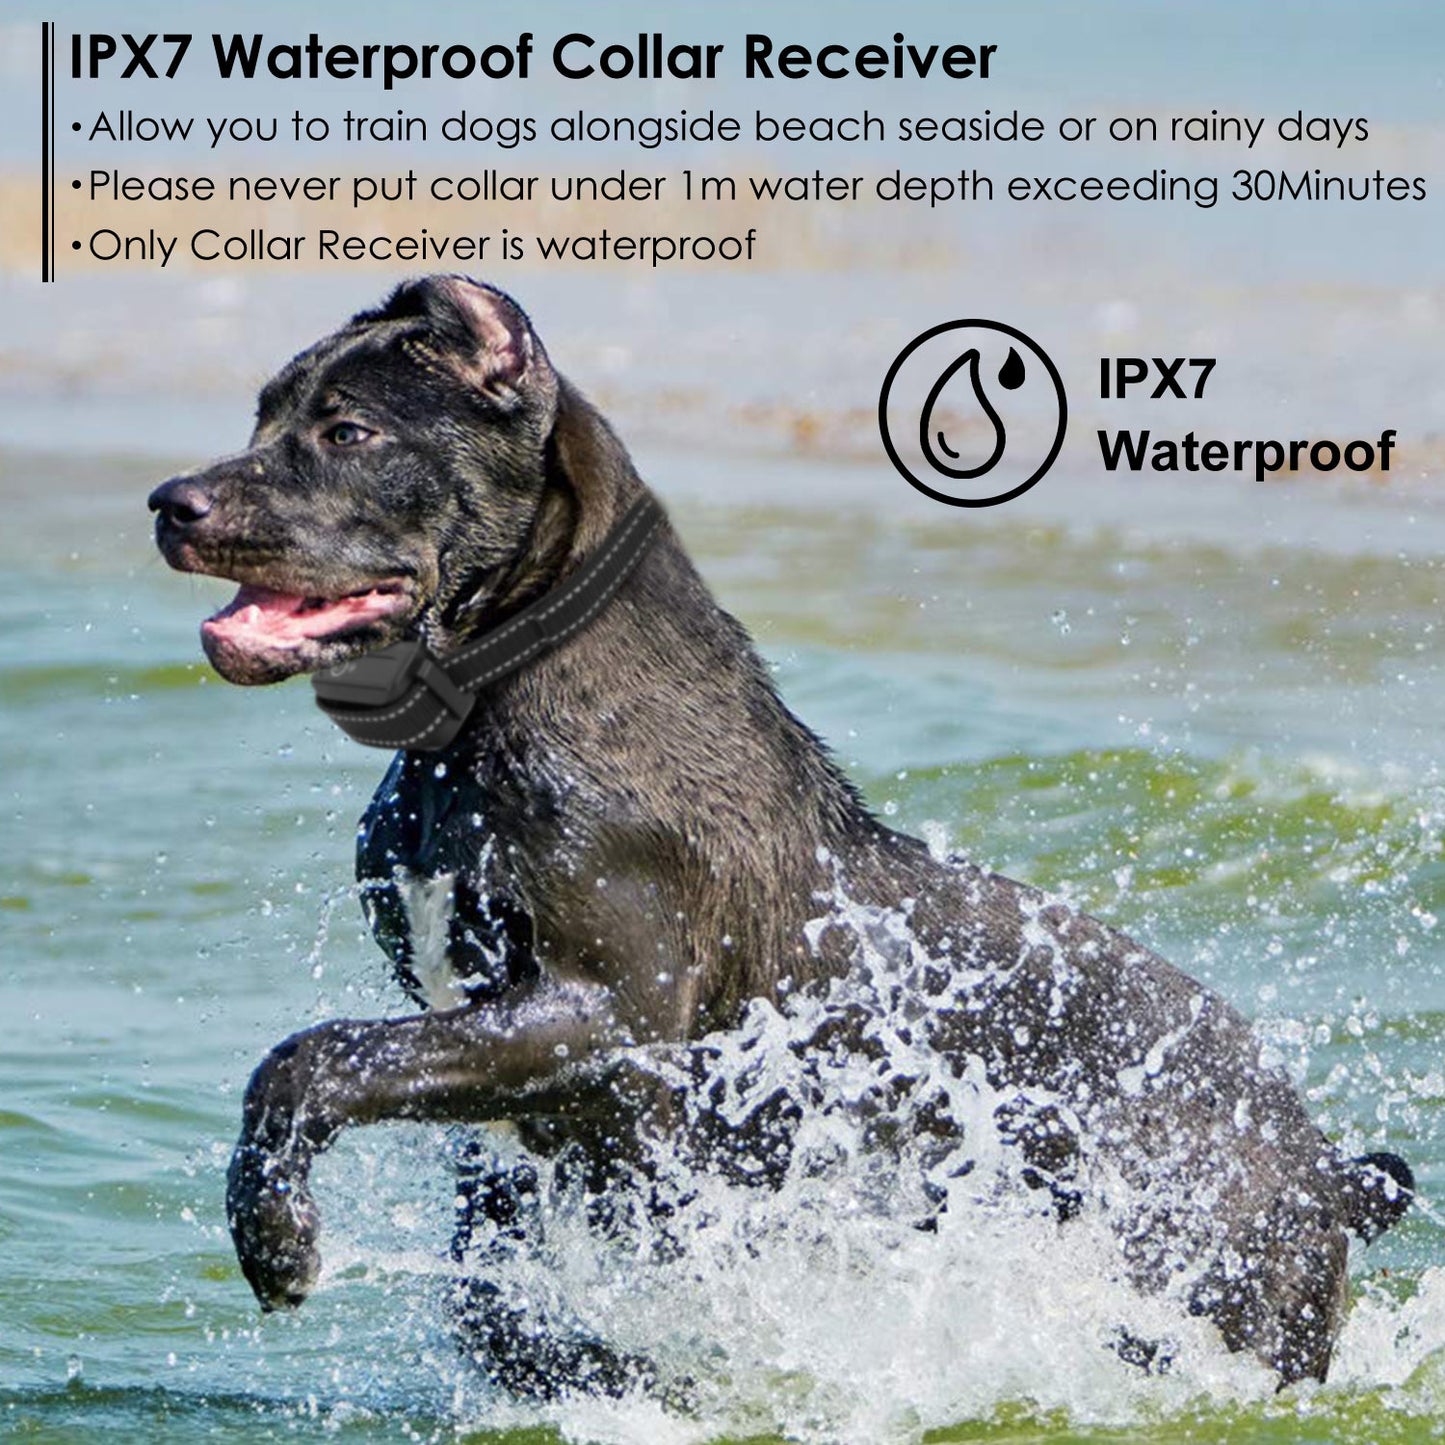 Dog Training Collar IPX7 Waterproof Pet Beep Vibration Electric Shock Collar